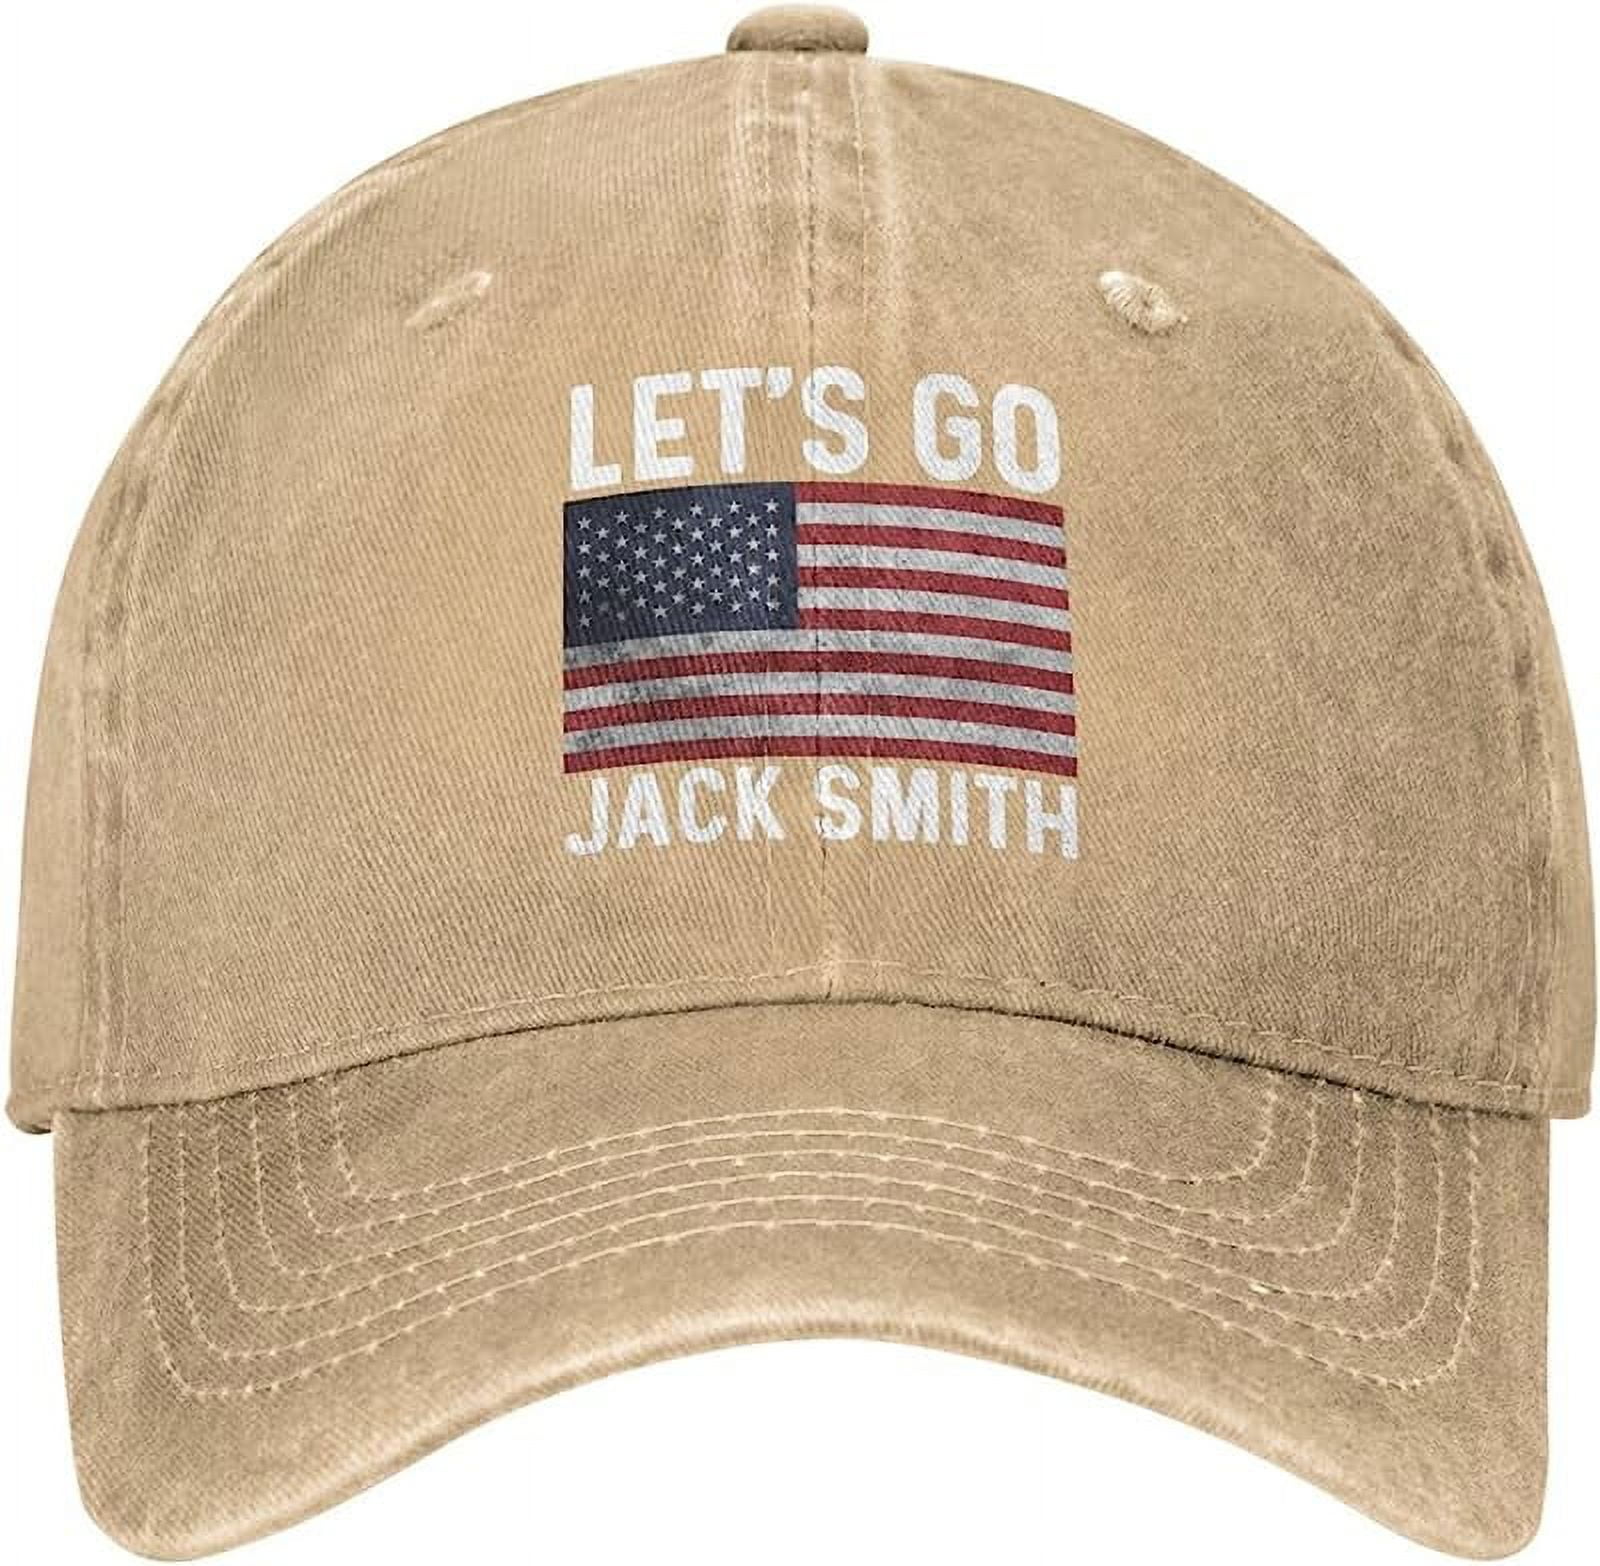 Let's Go Jack Smith Hat for Men Baseball Hat Graphic Hats